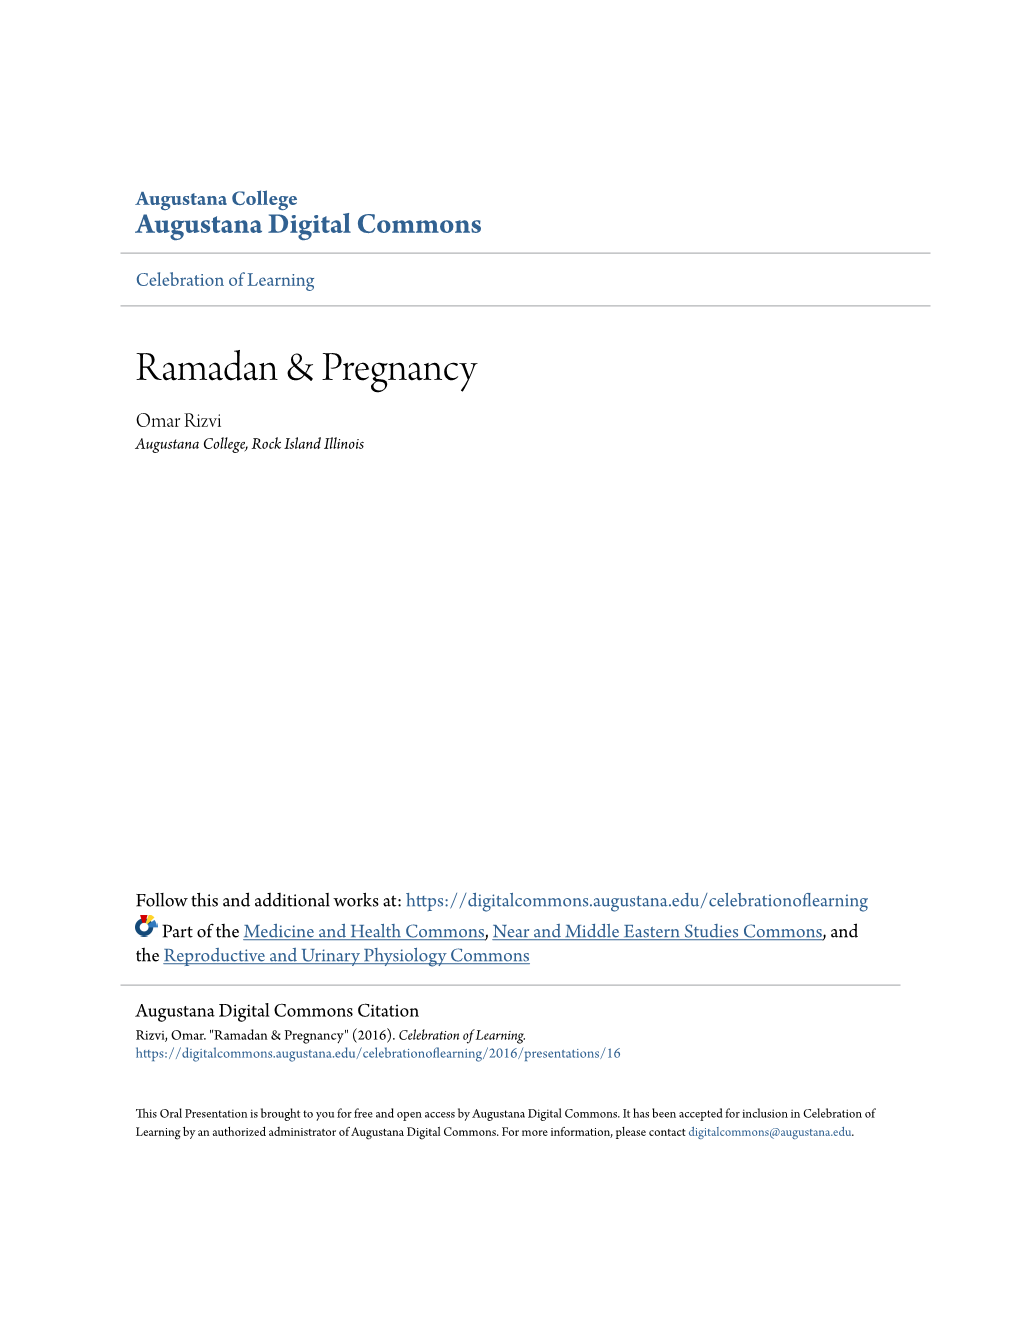 Ramadan & Pregnancy